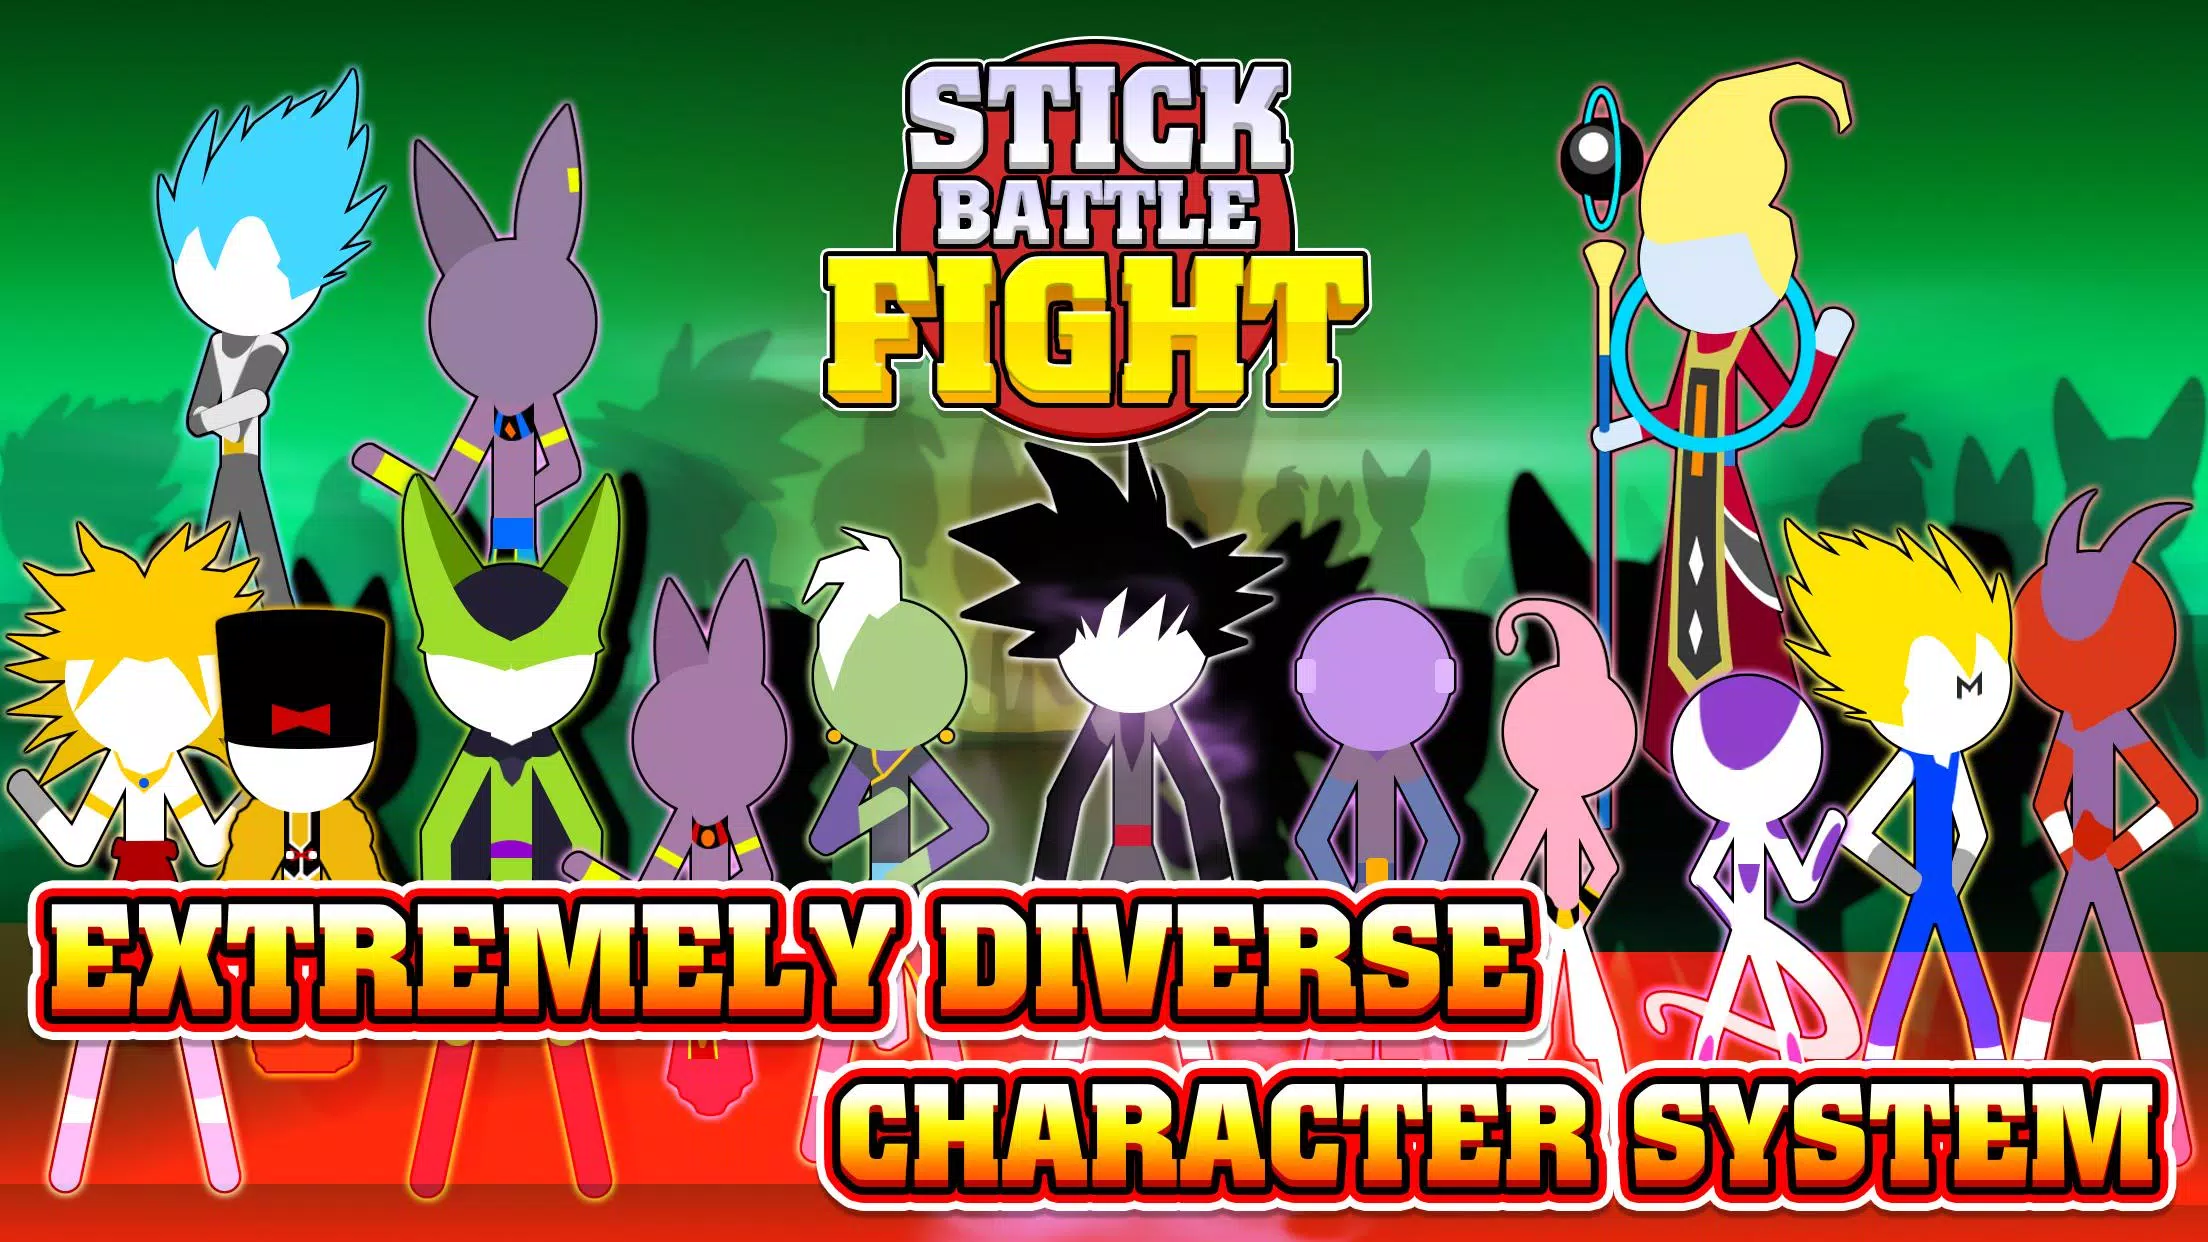 Stick Hero: Infinity Battle - Apps on Google Play